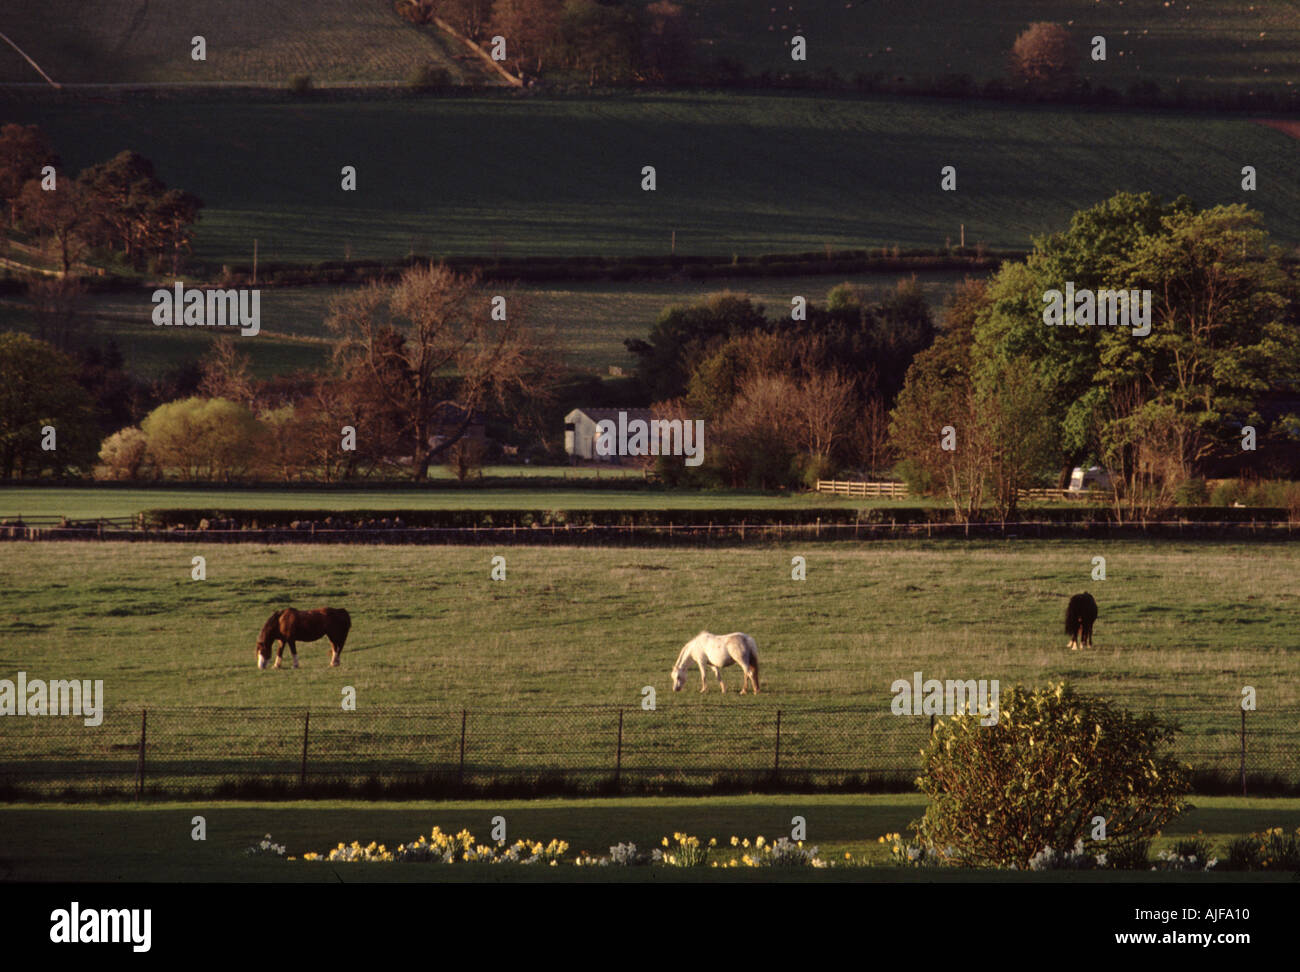 UK Schottland Grenzen Landschaft mit Pferden Stockfoto